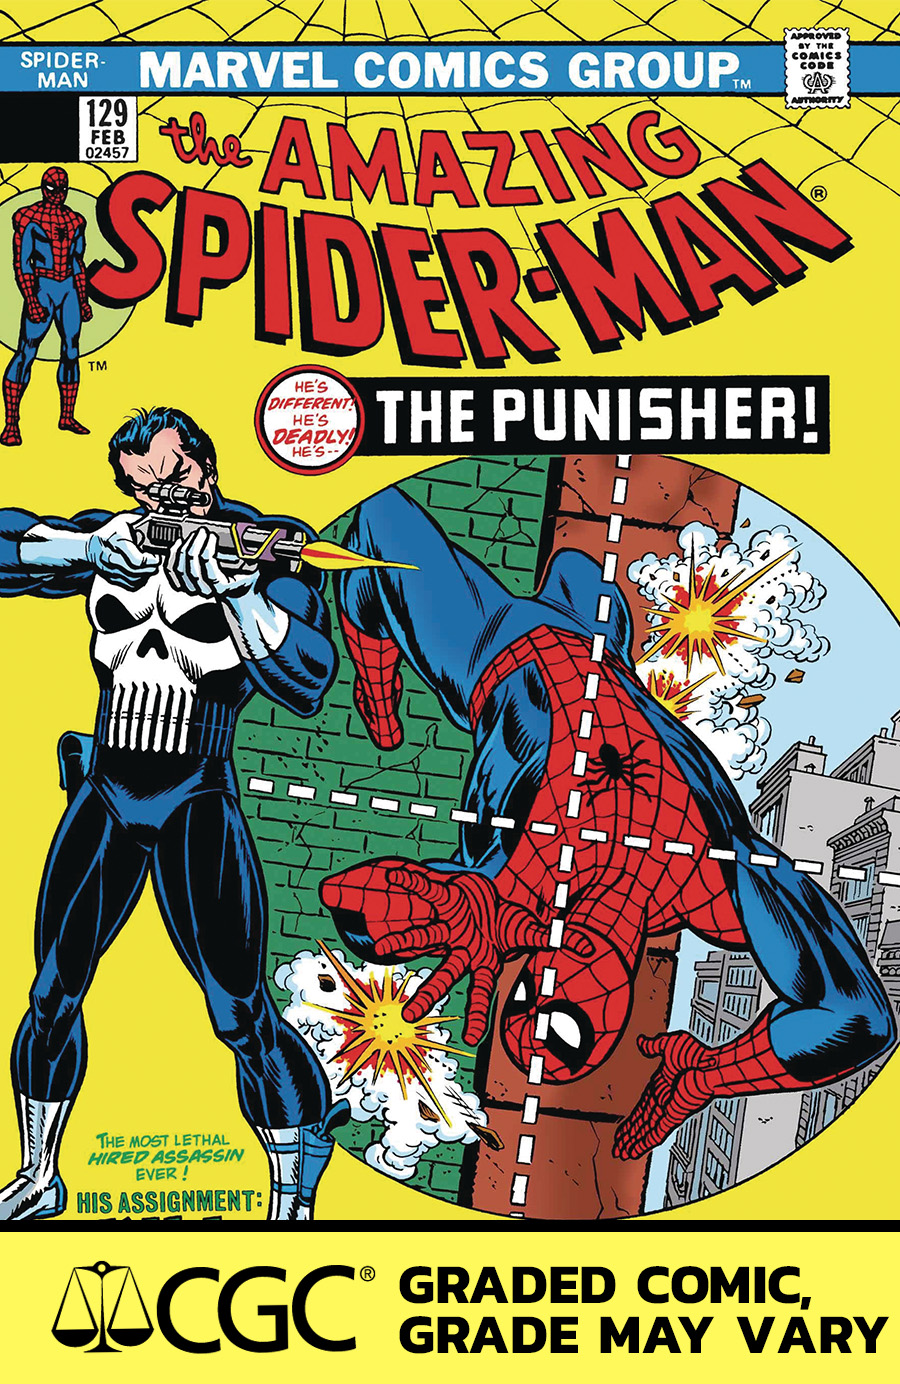 Amazing Spider-Man #129 Cover F Facsimile Edition DF CGC Graded